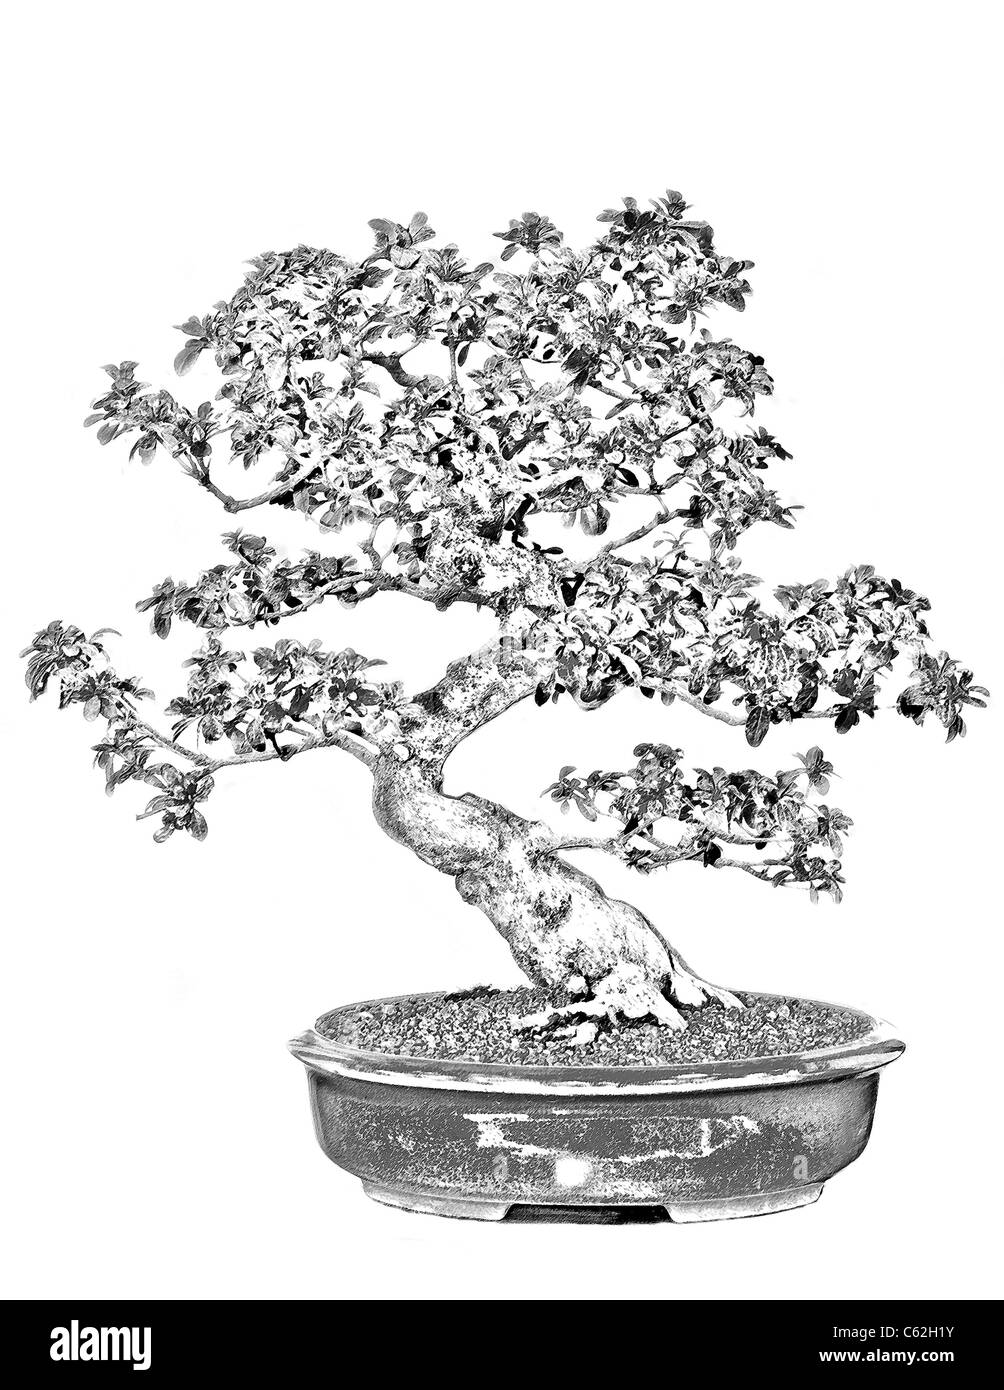 Japanese Bonsai Tree Sketch Design Stock Illustration 2043370838   Shutterstock